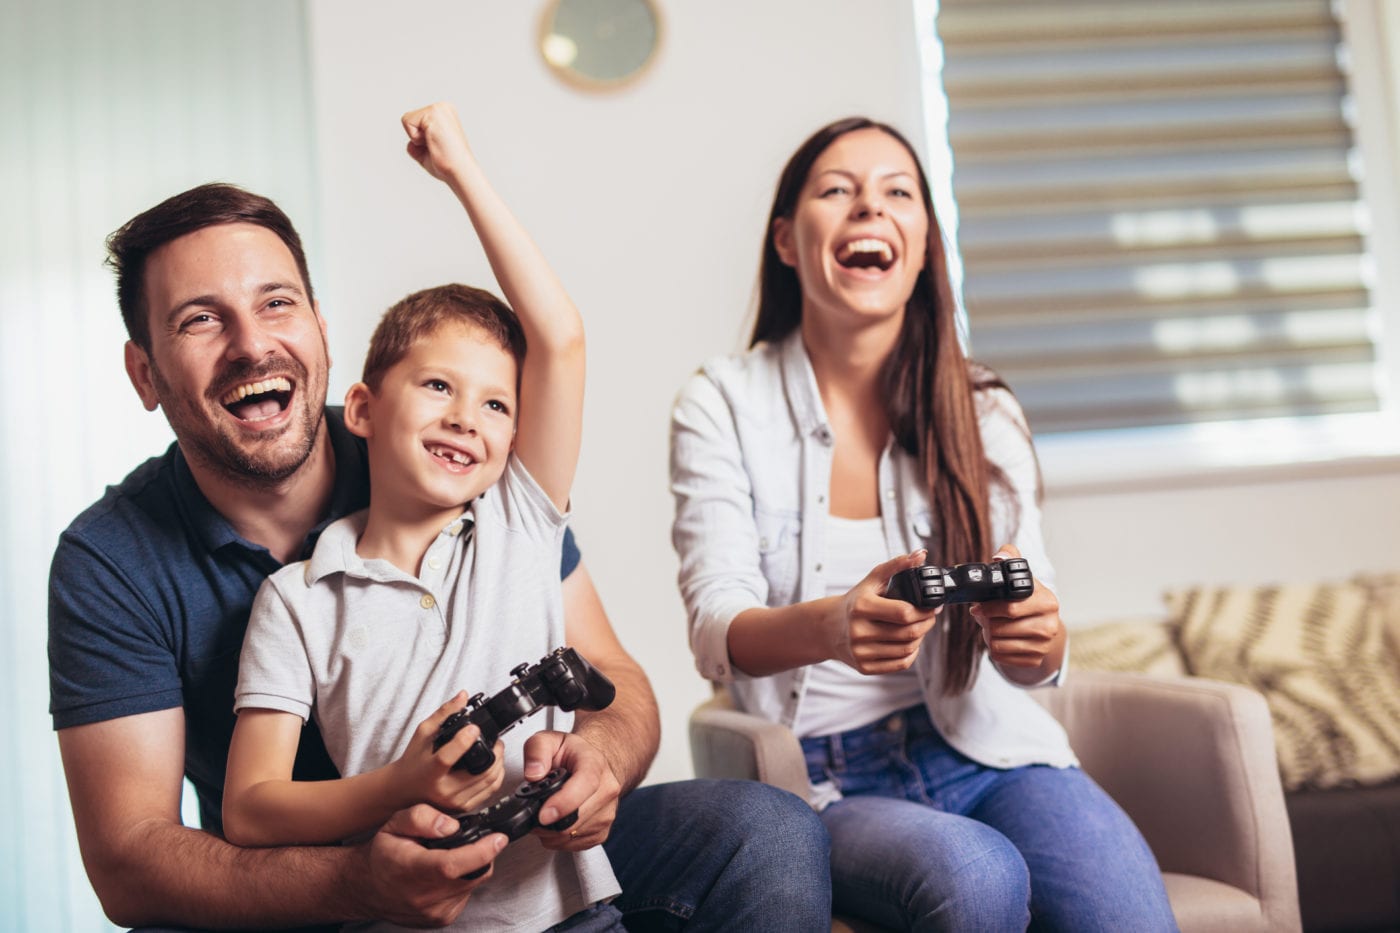 benefits of video games